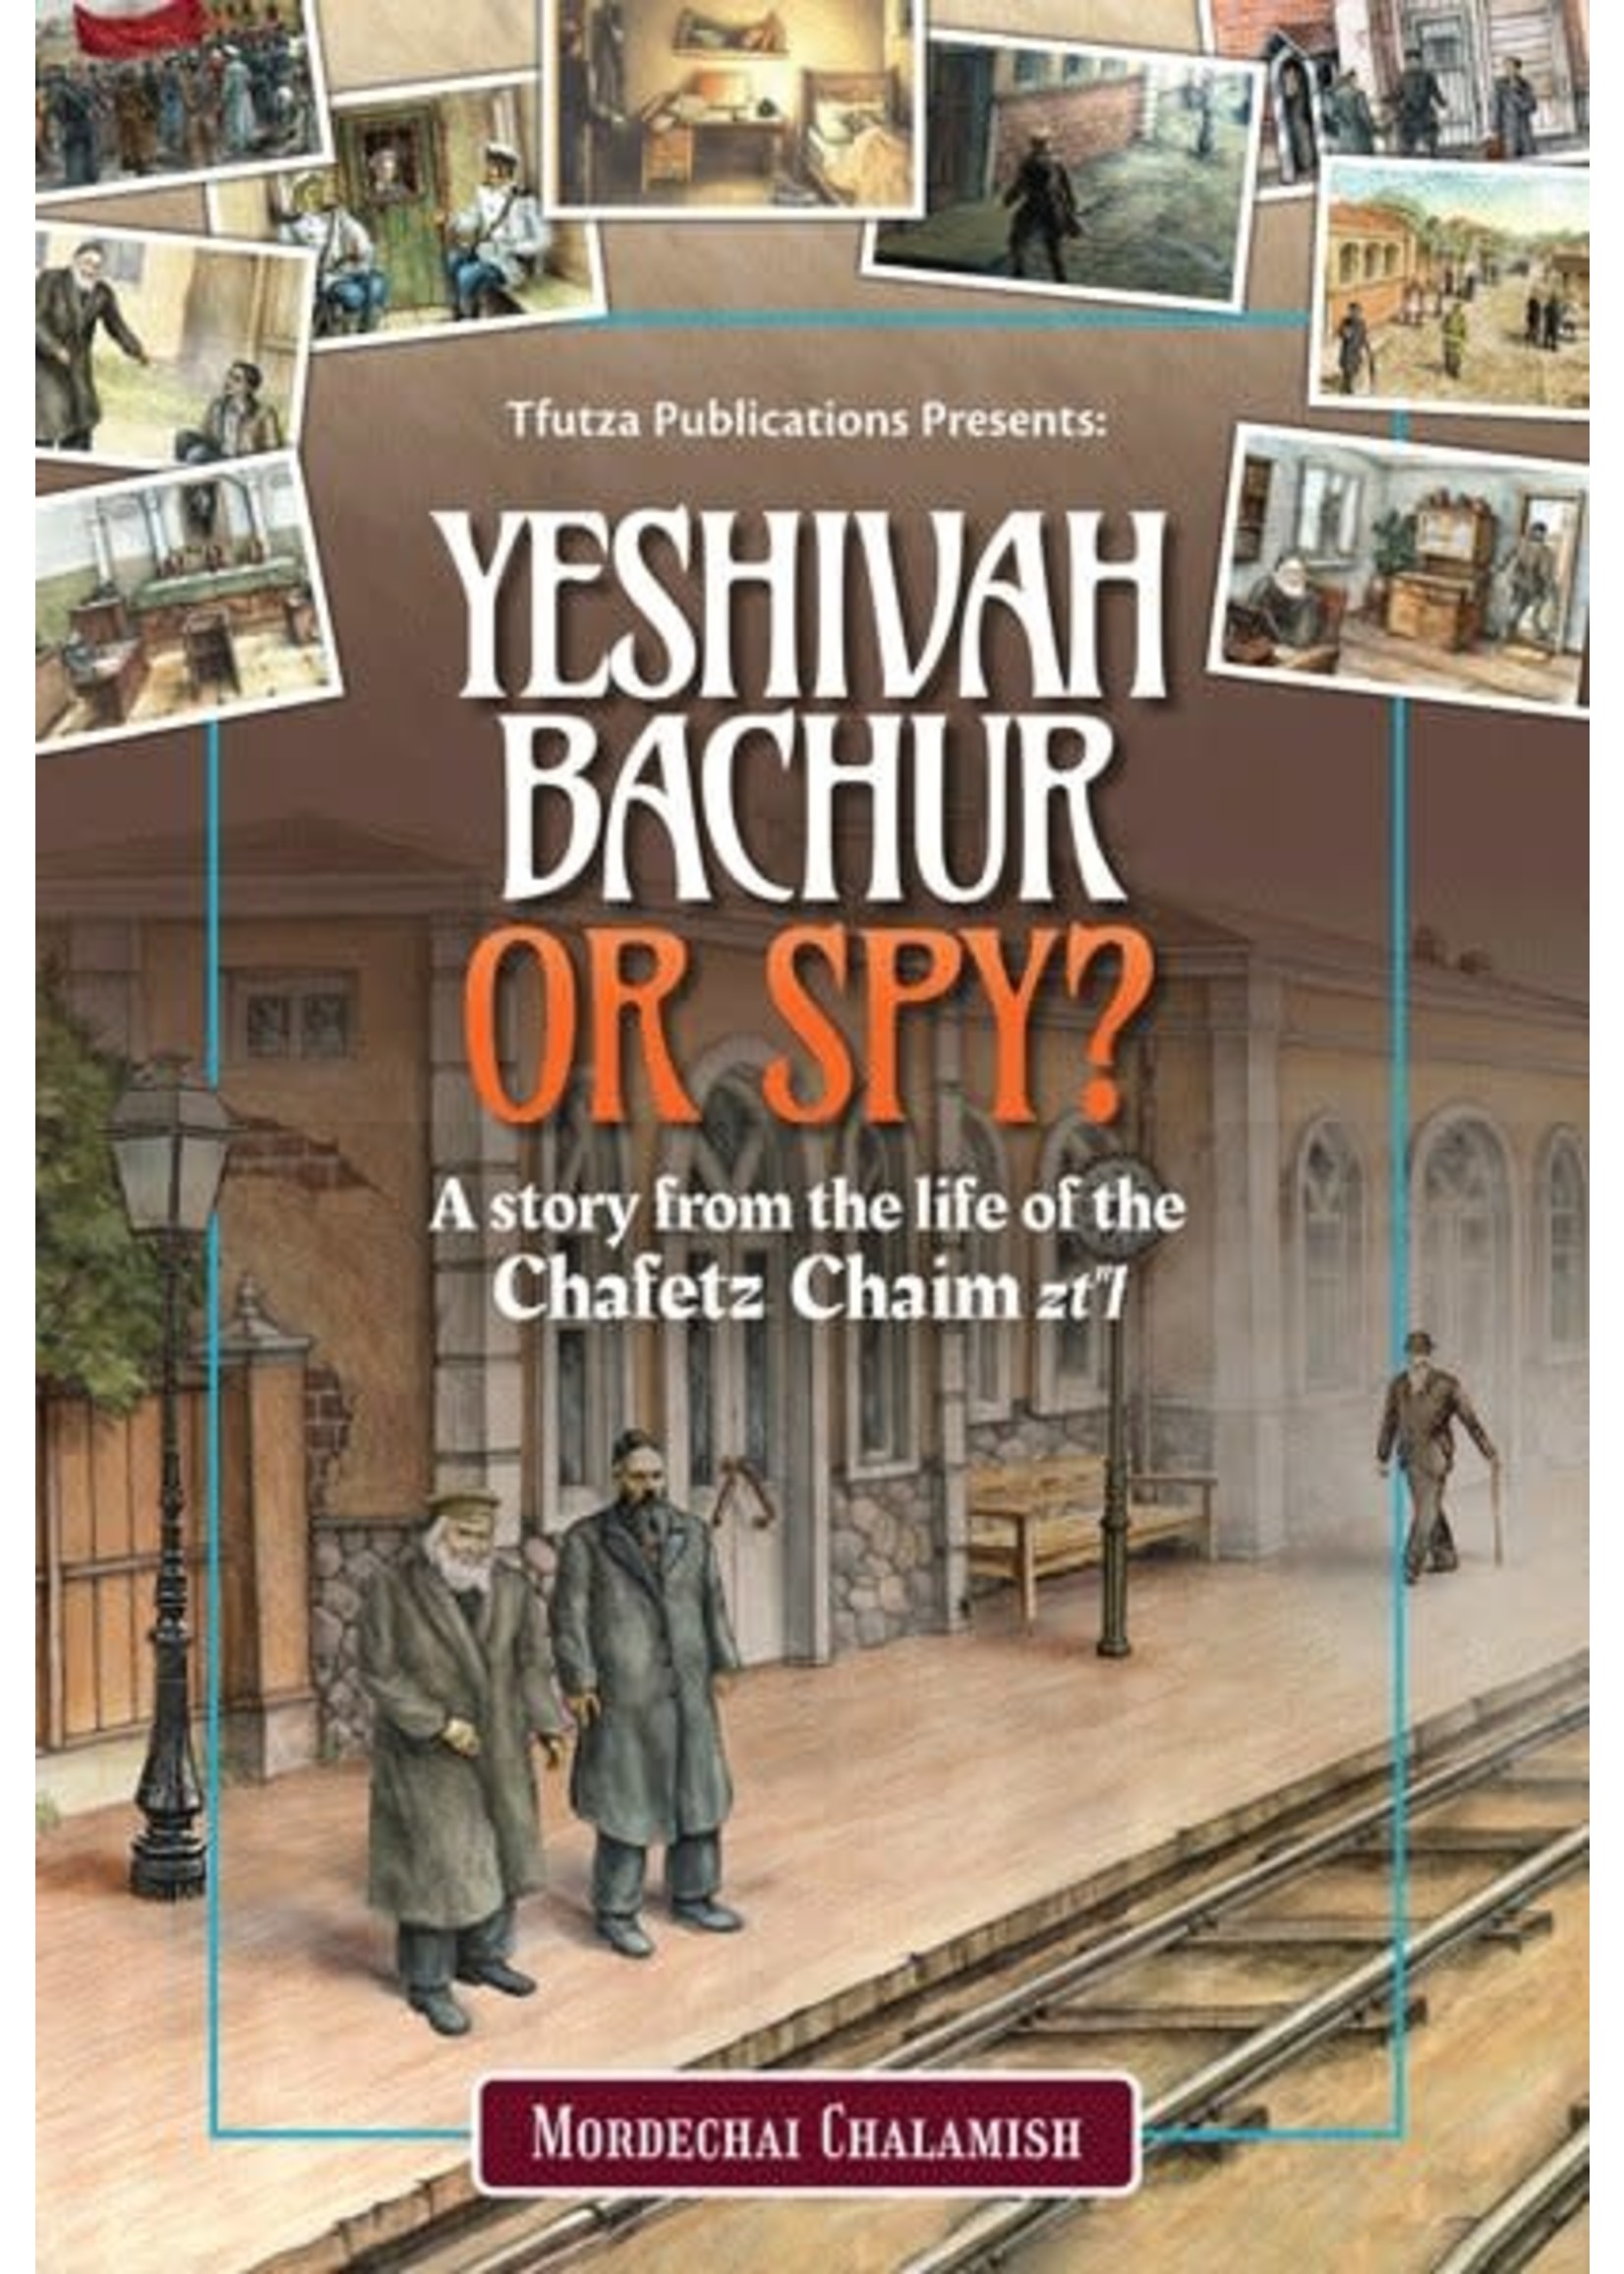 YESHIVA BOCHUR OR SPY?